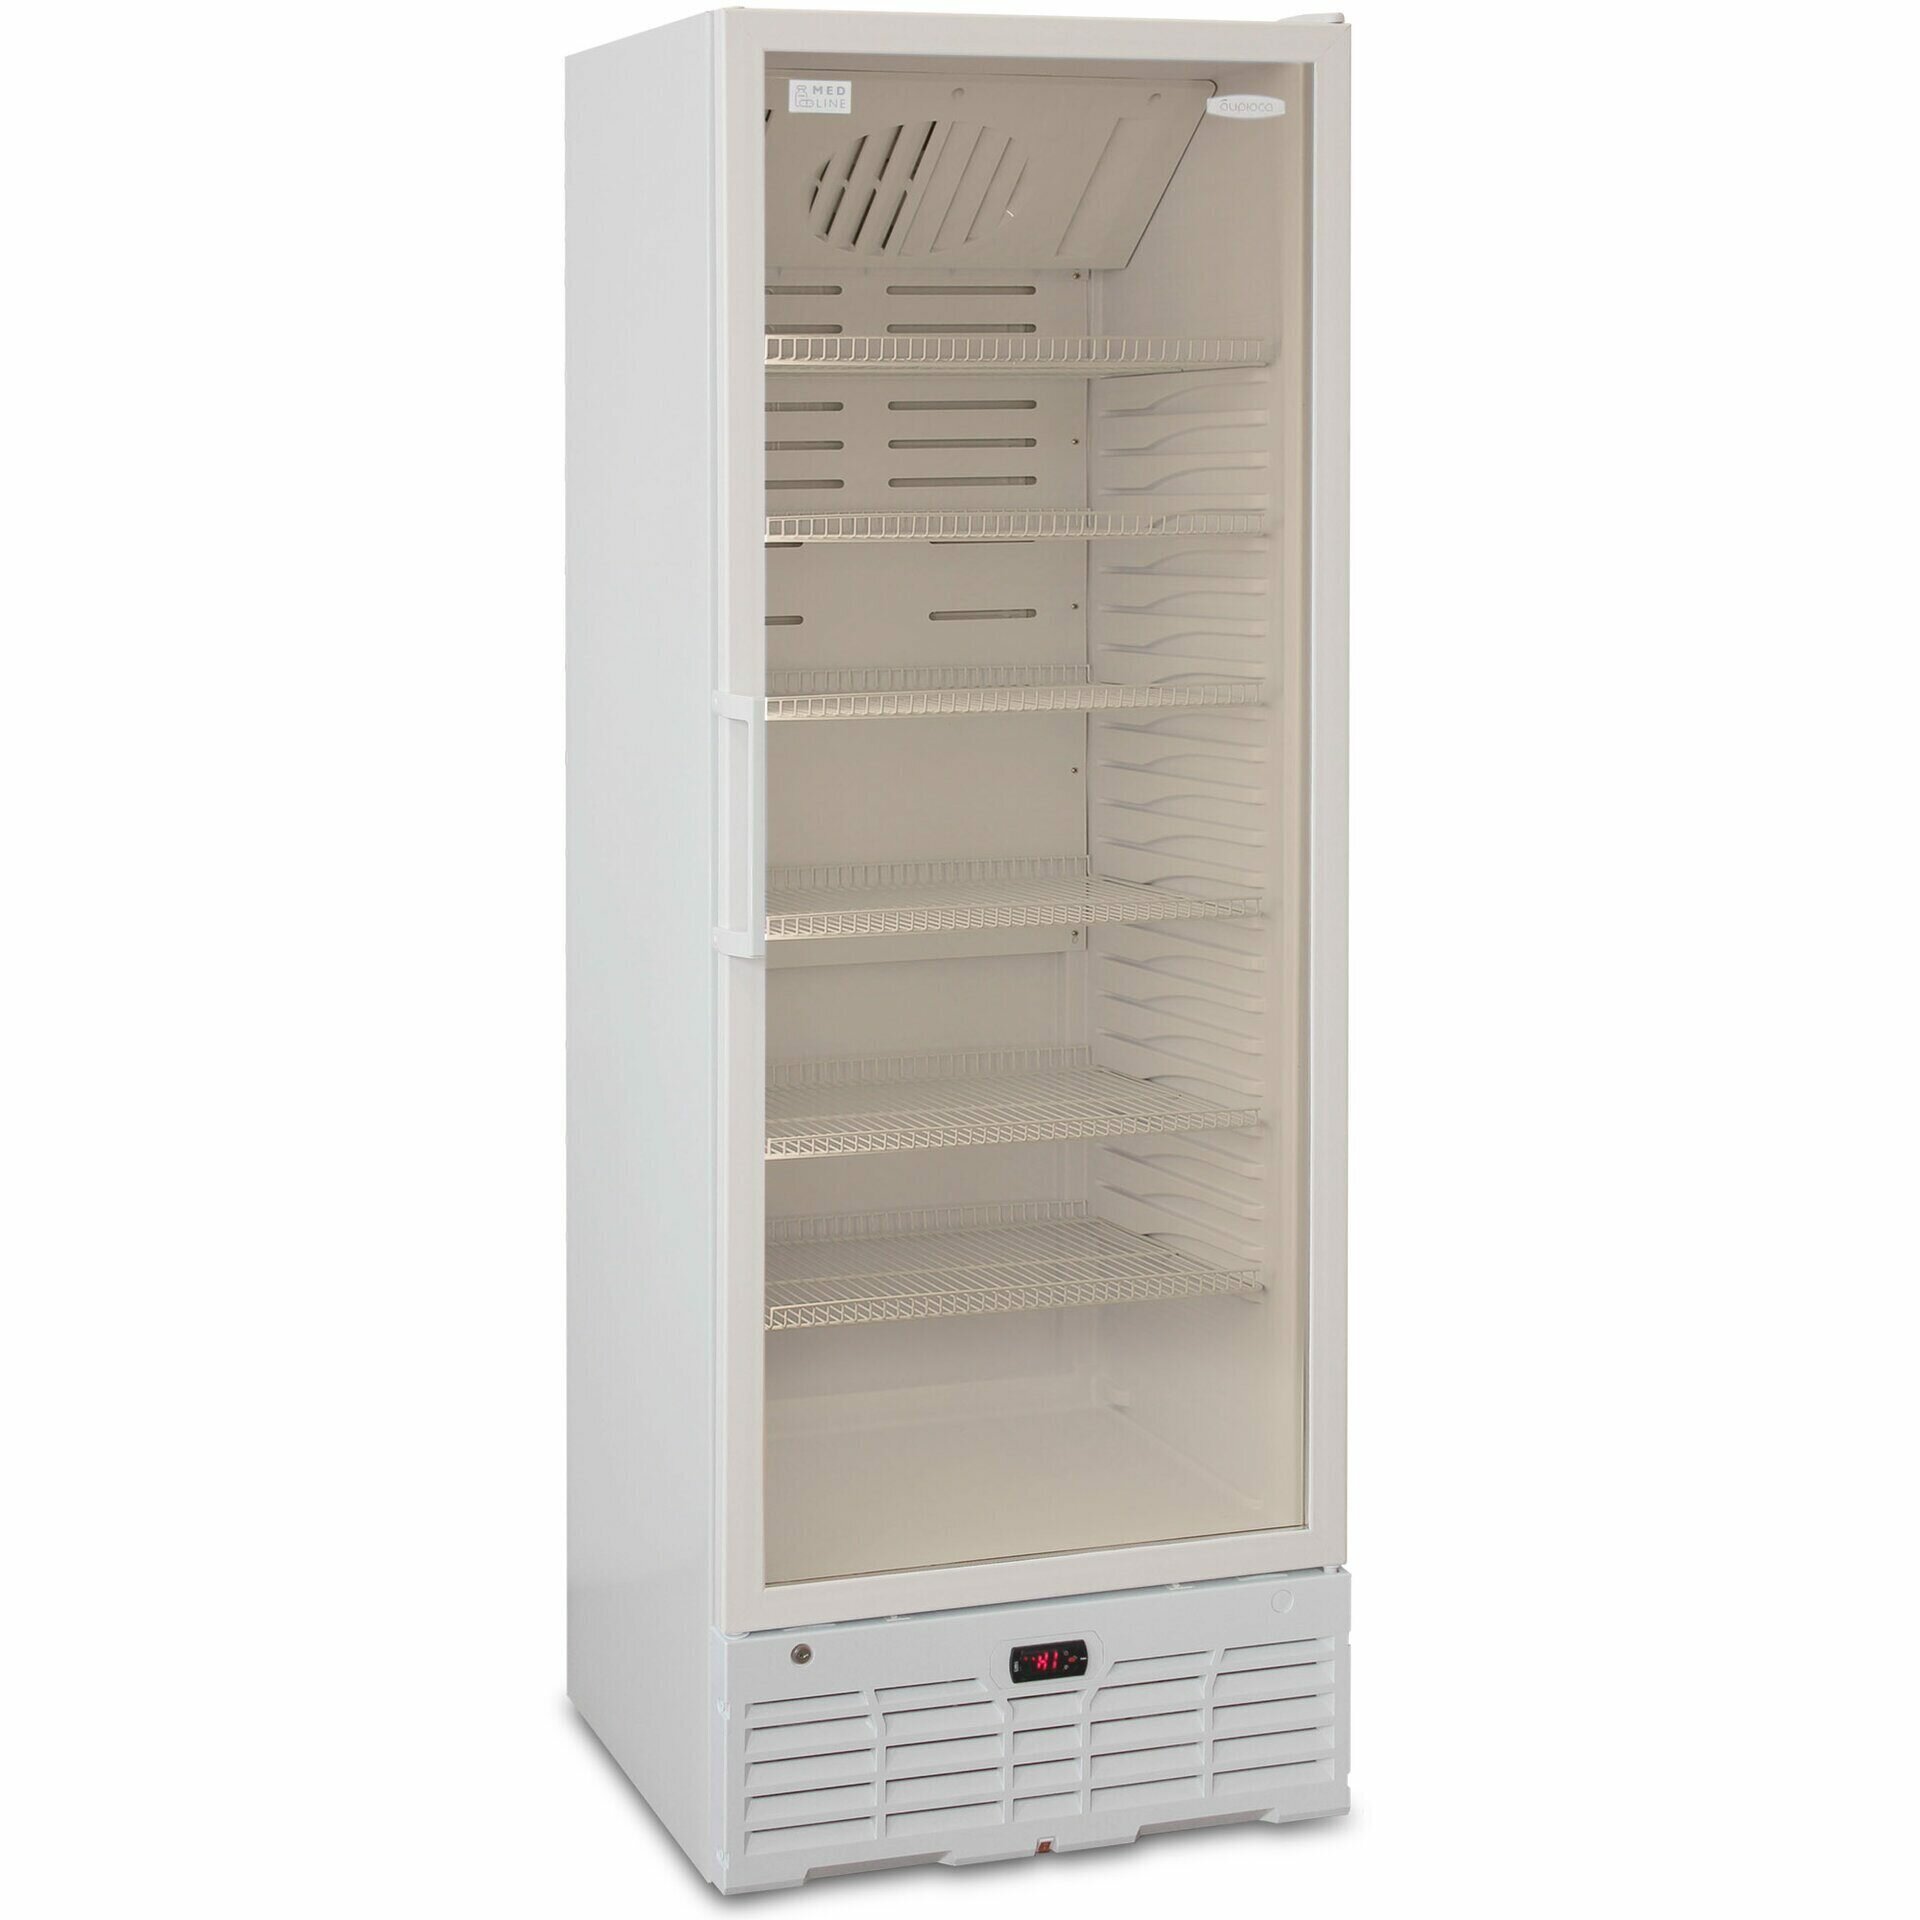 Фармацевтический холодильник Бирюса 450 SR